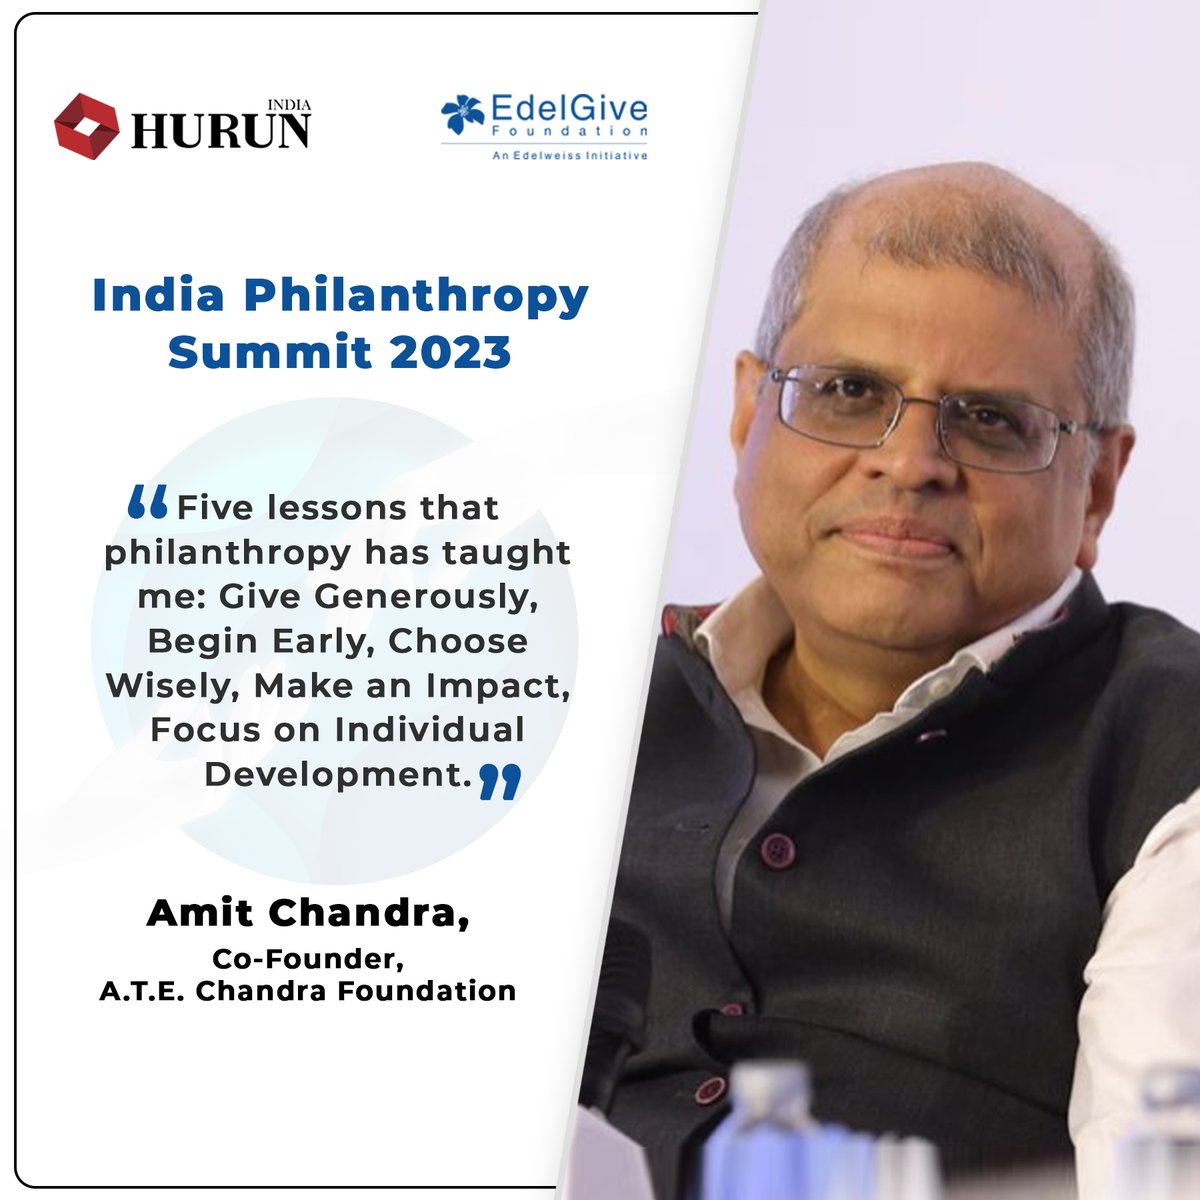 Amit Chandra, Co-Founder - ATE Chandra Foundation, at the India Philanthropy Summit 2023.  

#HurunreportIndia #MakingADifference #PhilanthropyMatters #EdelGiveFoundation #HurunIndia #hurunreportindia.